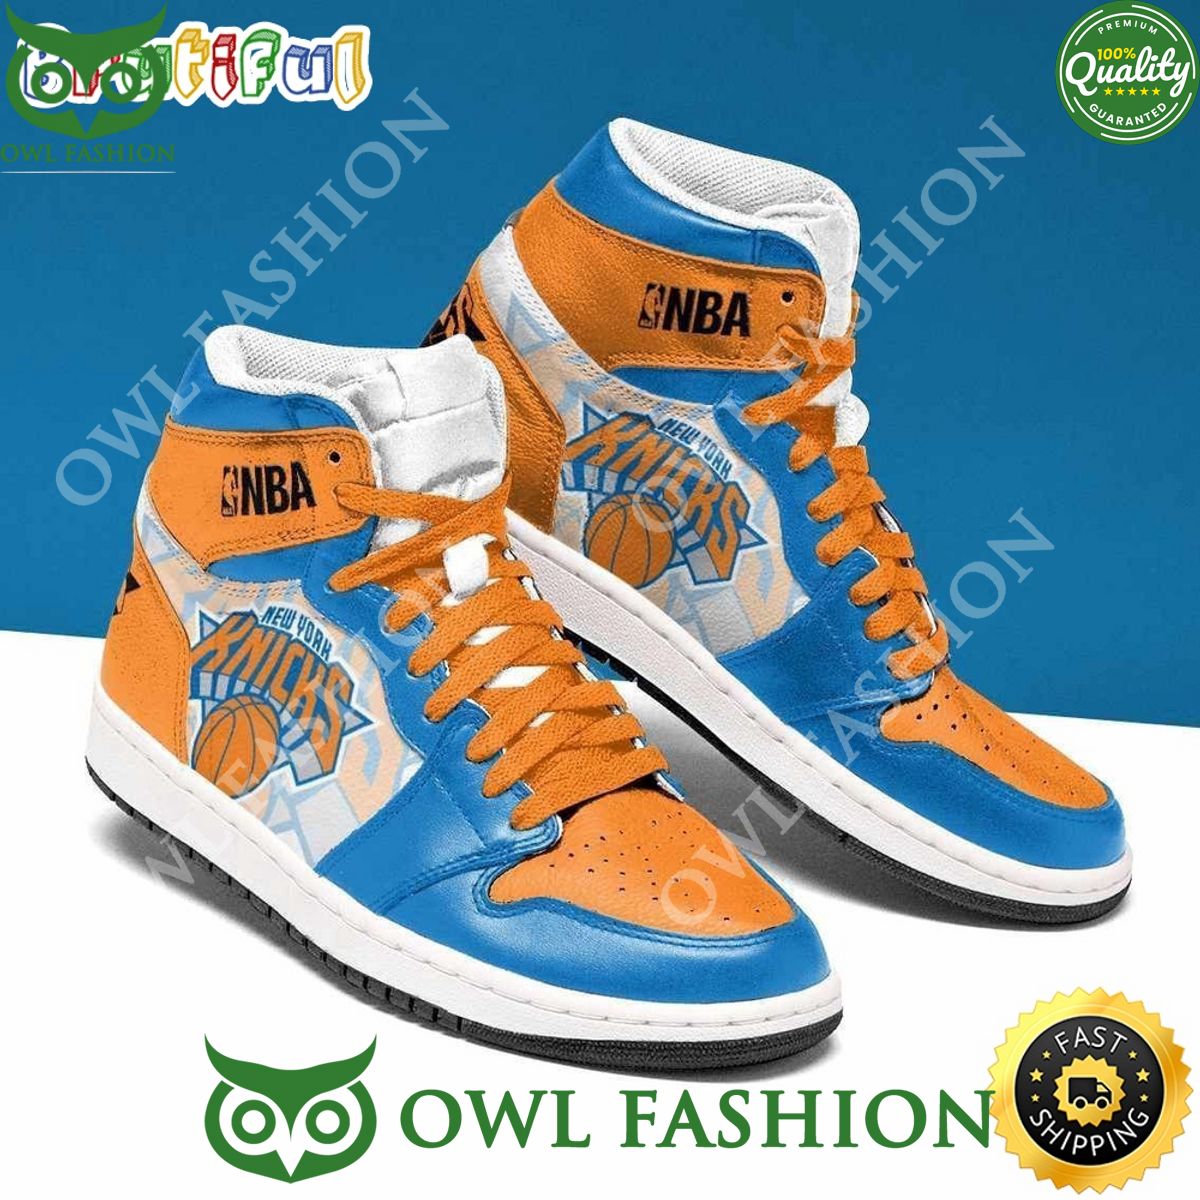 nba new york knicks orange blue air jordan 1 high sneakers 1 uaobt.jpg